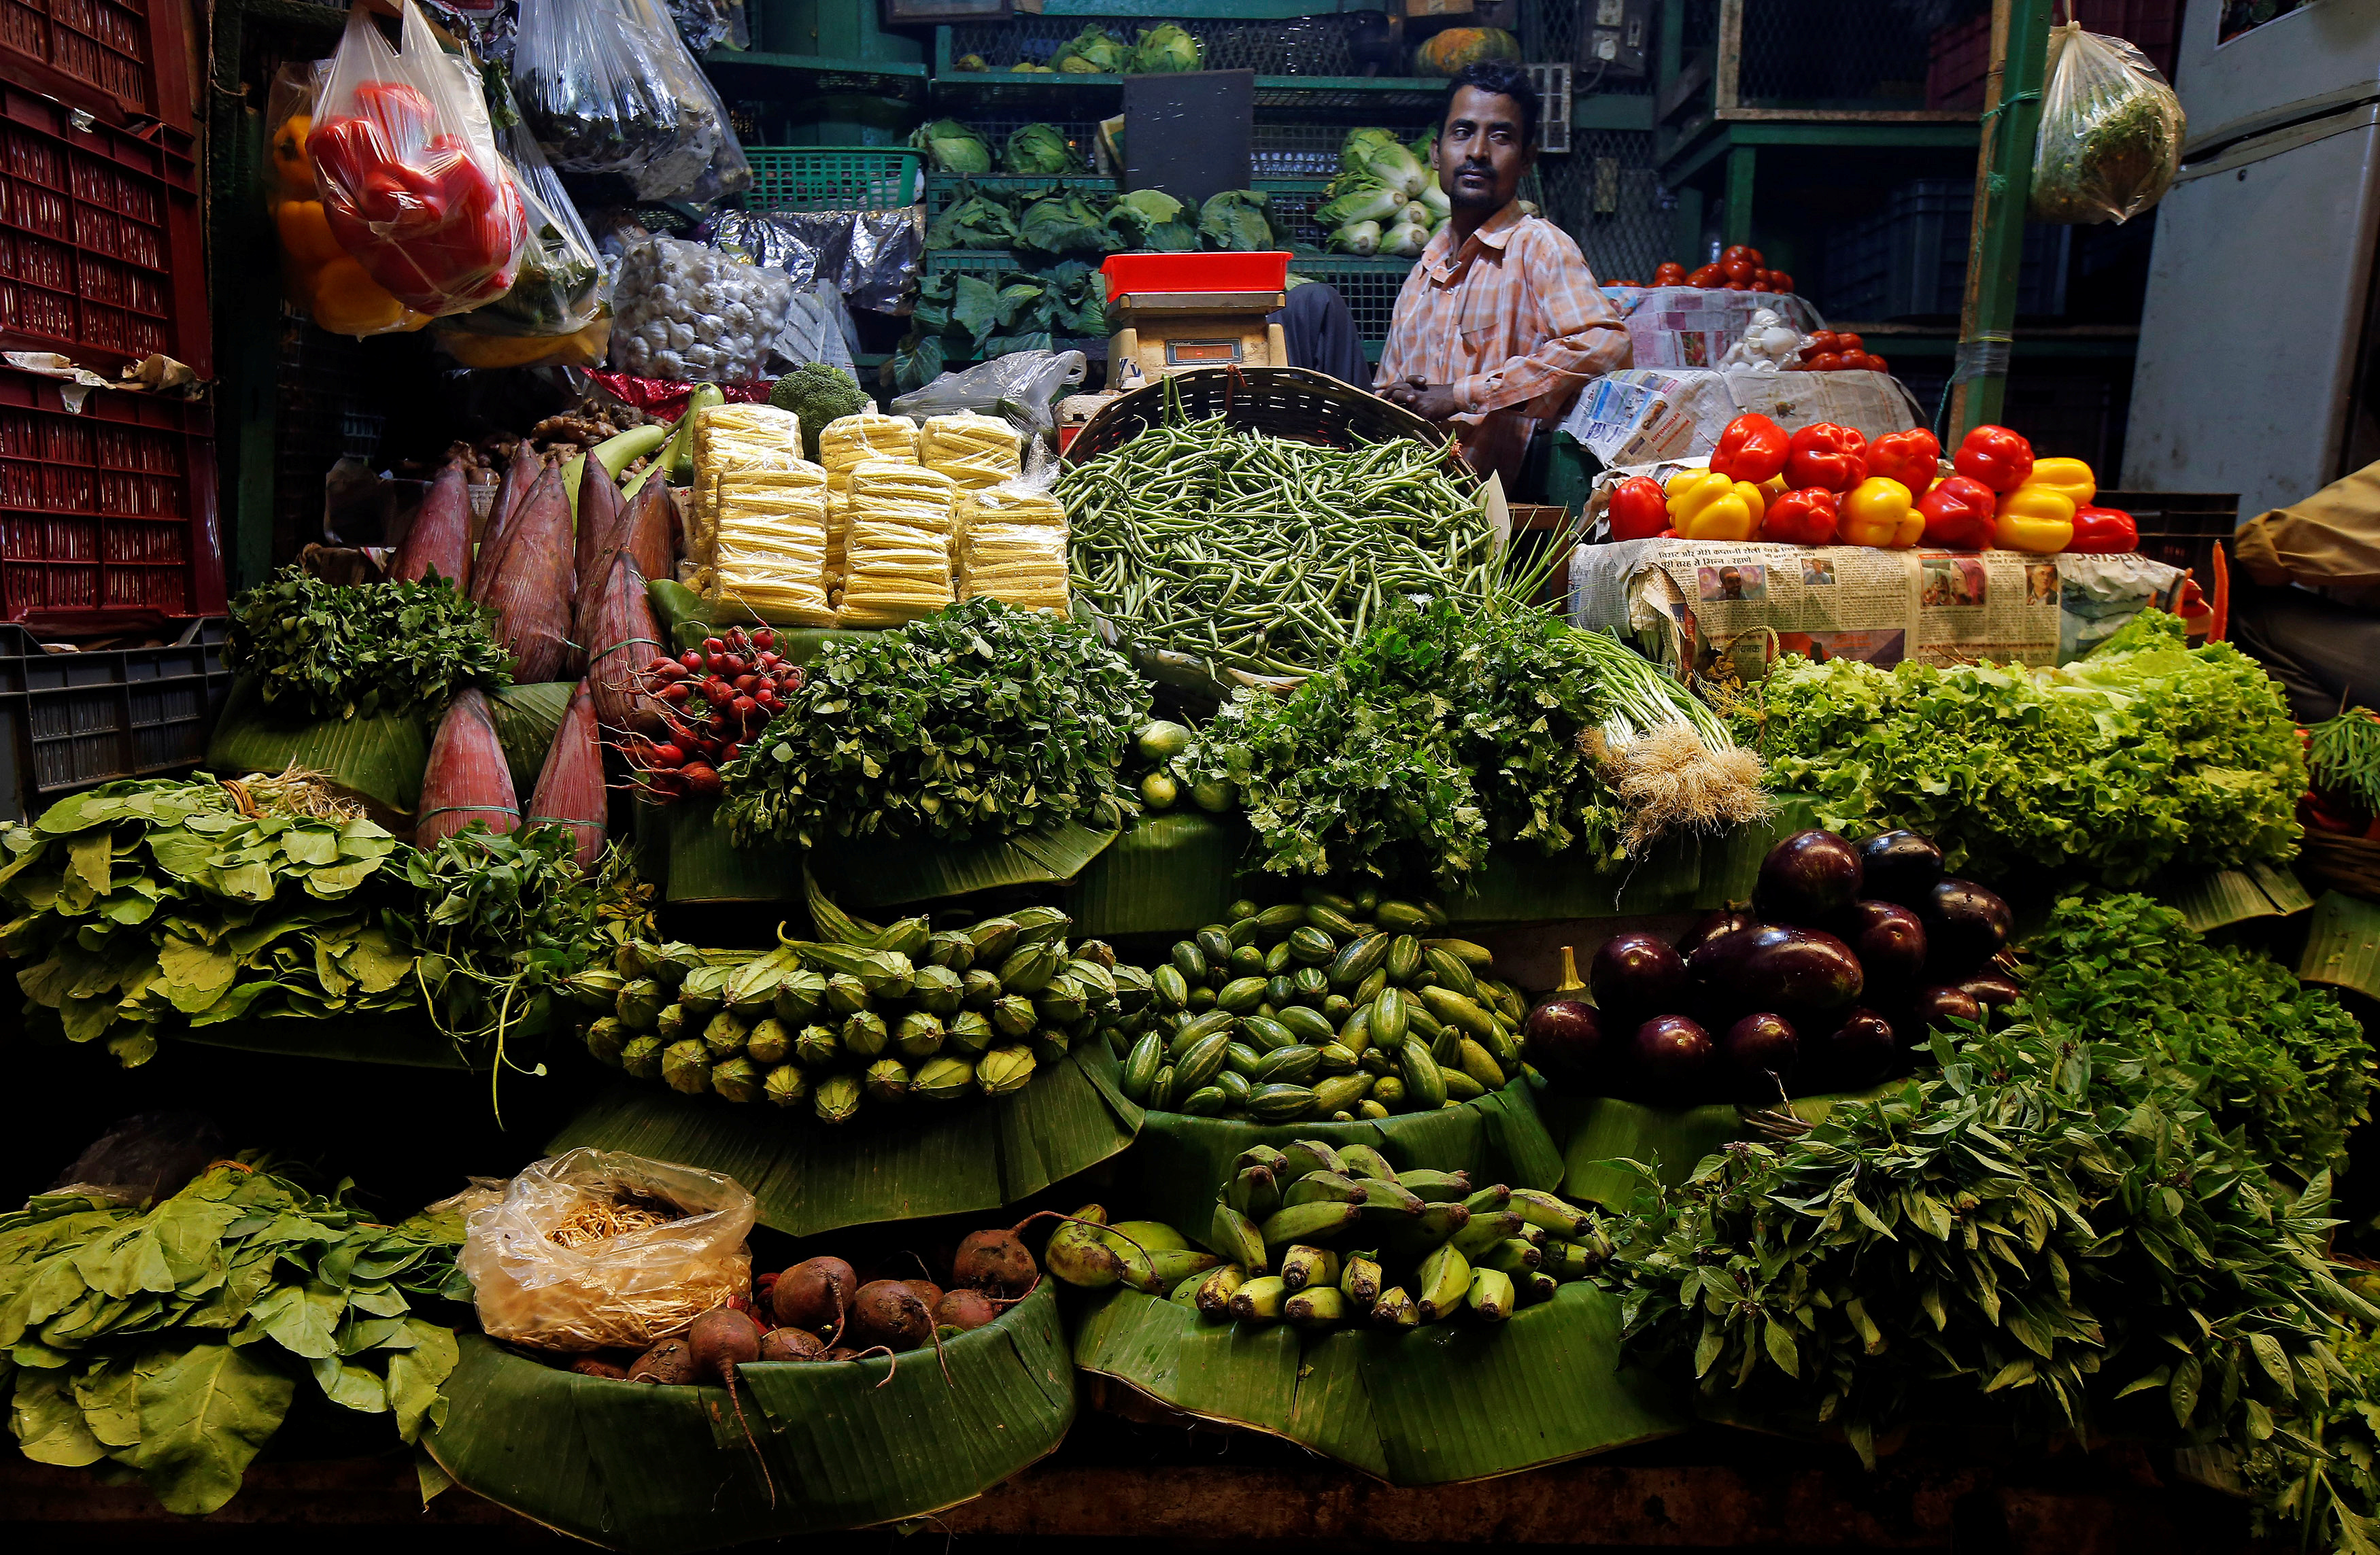 A vegetables vendor waits for customers at a market in Kolkata